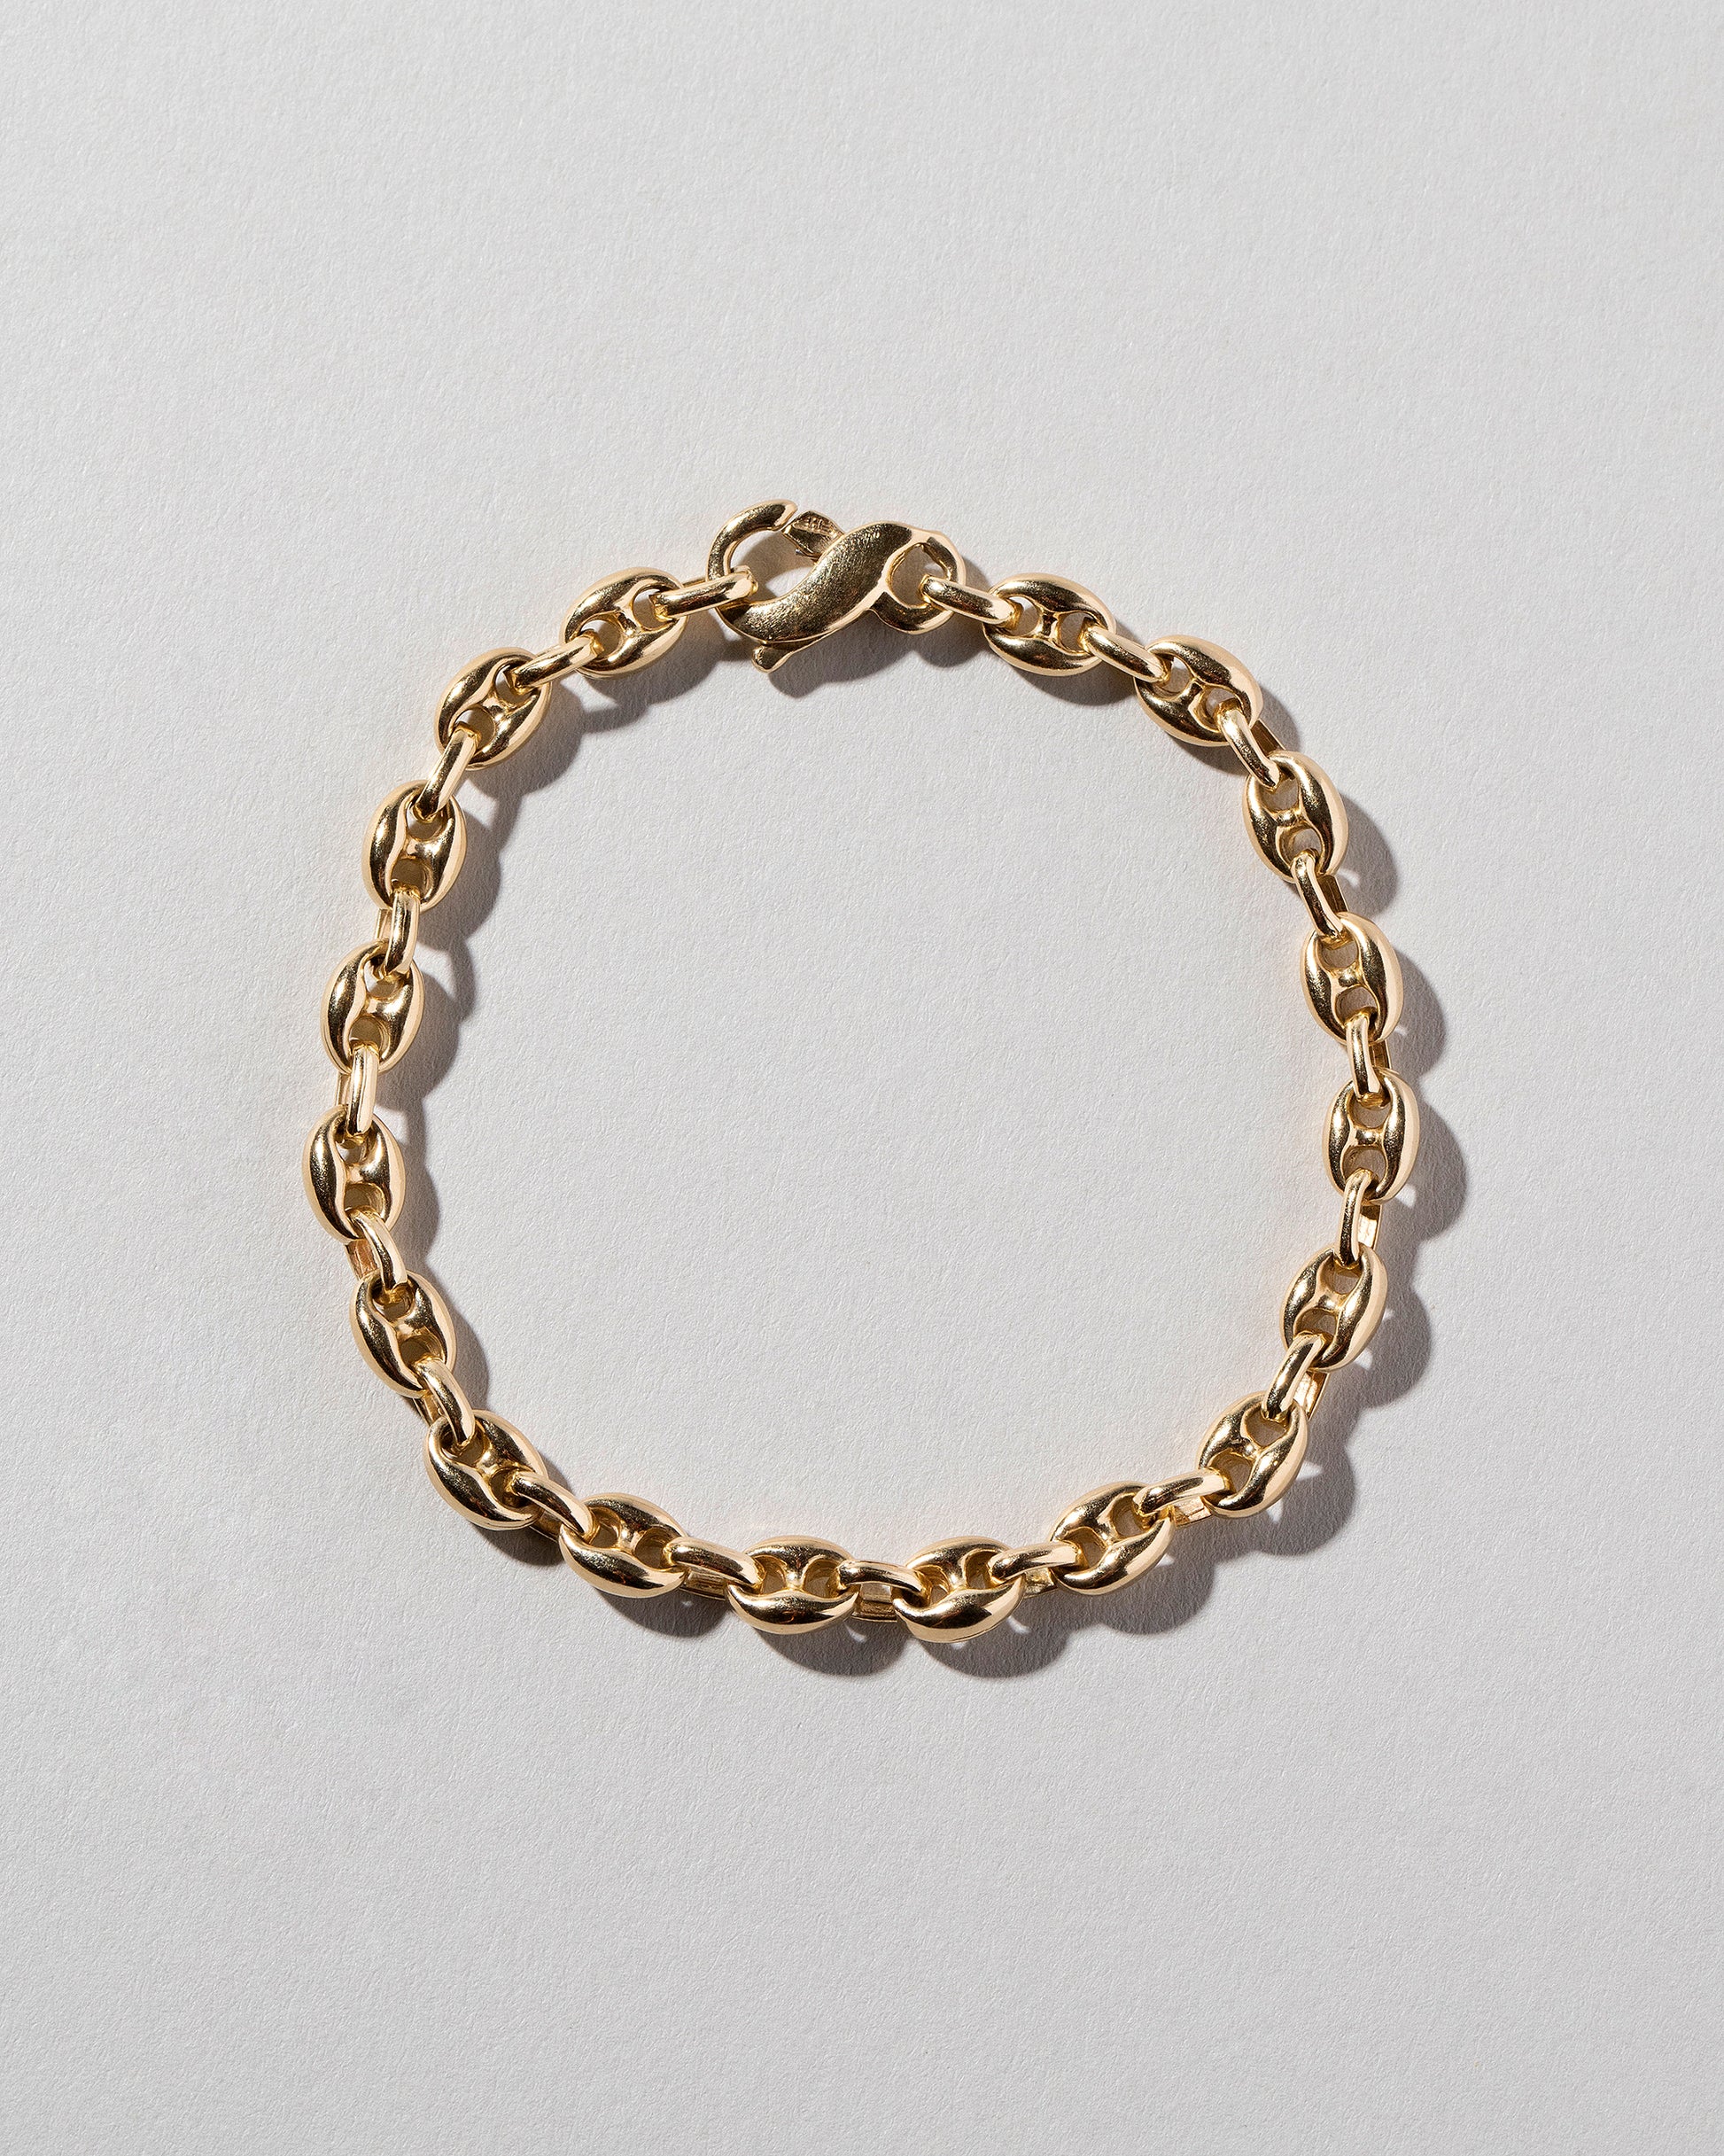 Segmented Chain Bracelet on light color background.